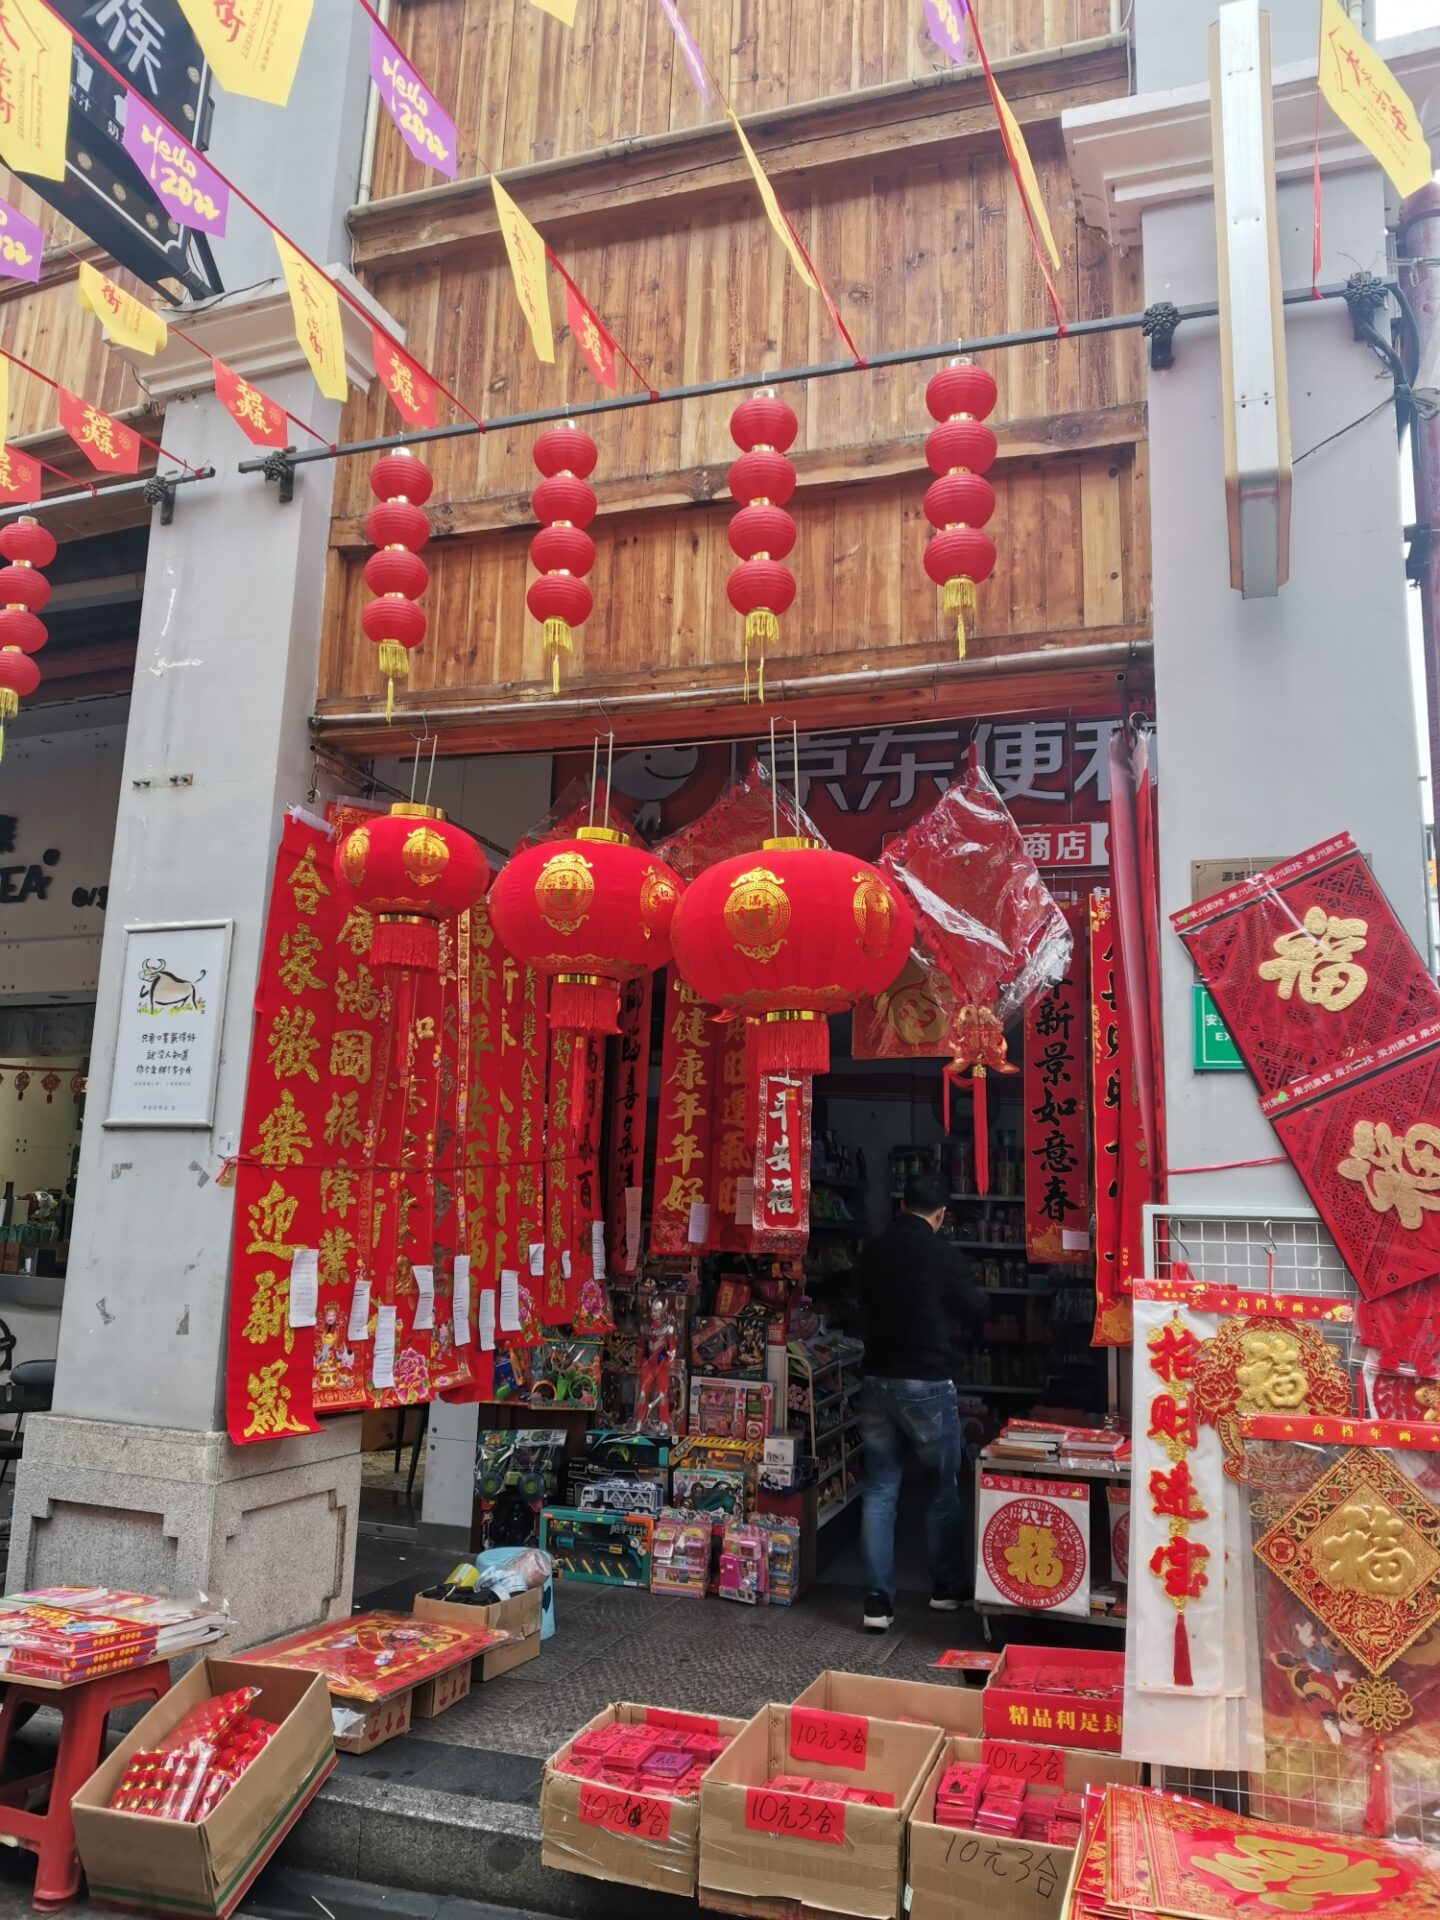 Chinese market stall